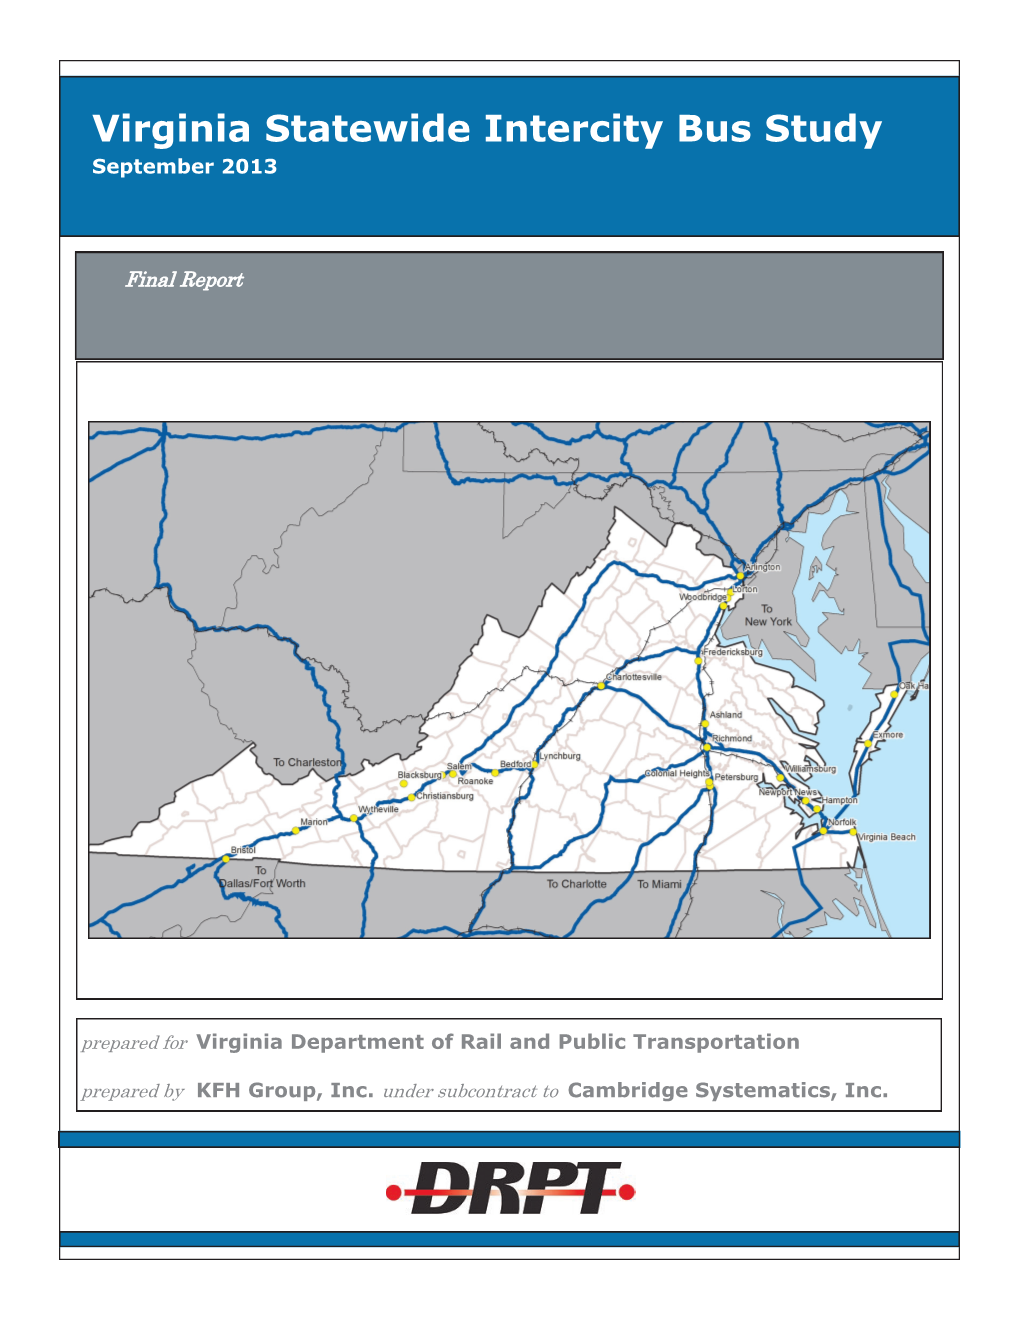 Virginia Statewide Intercity Bus Study (2013)